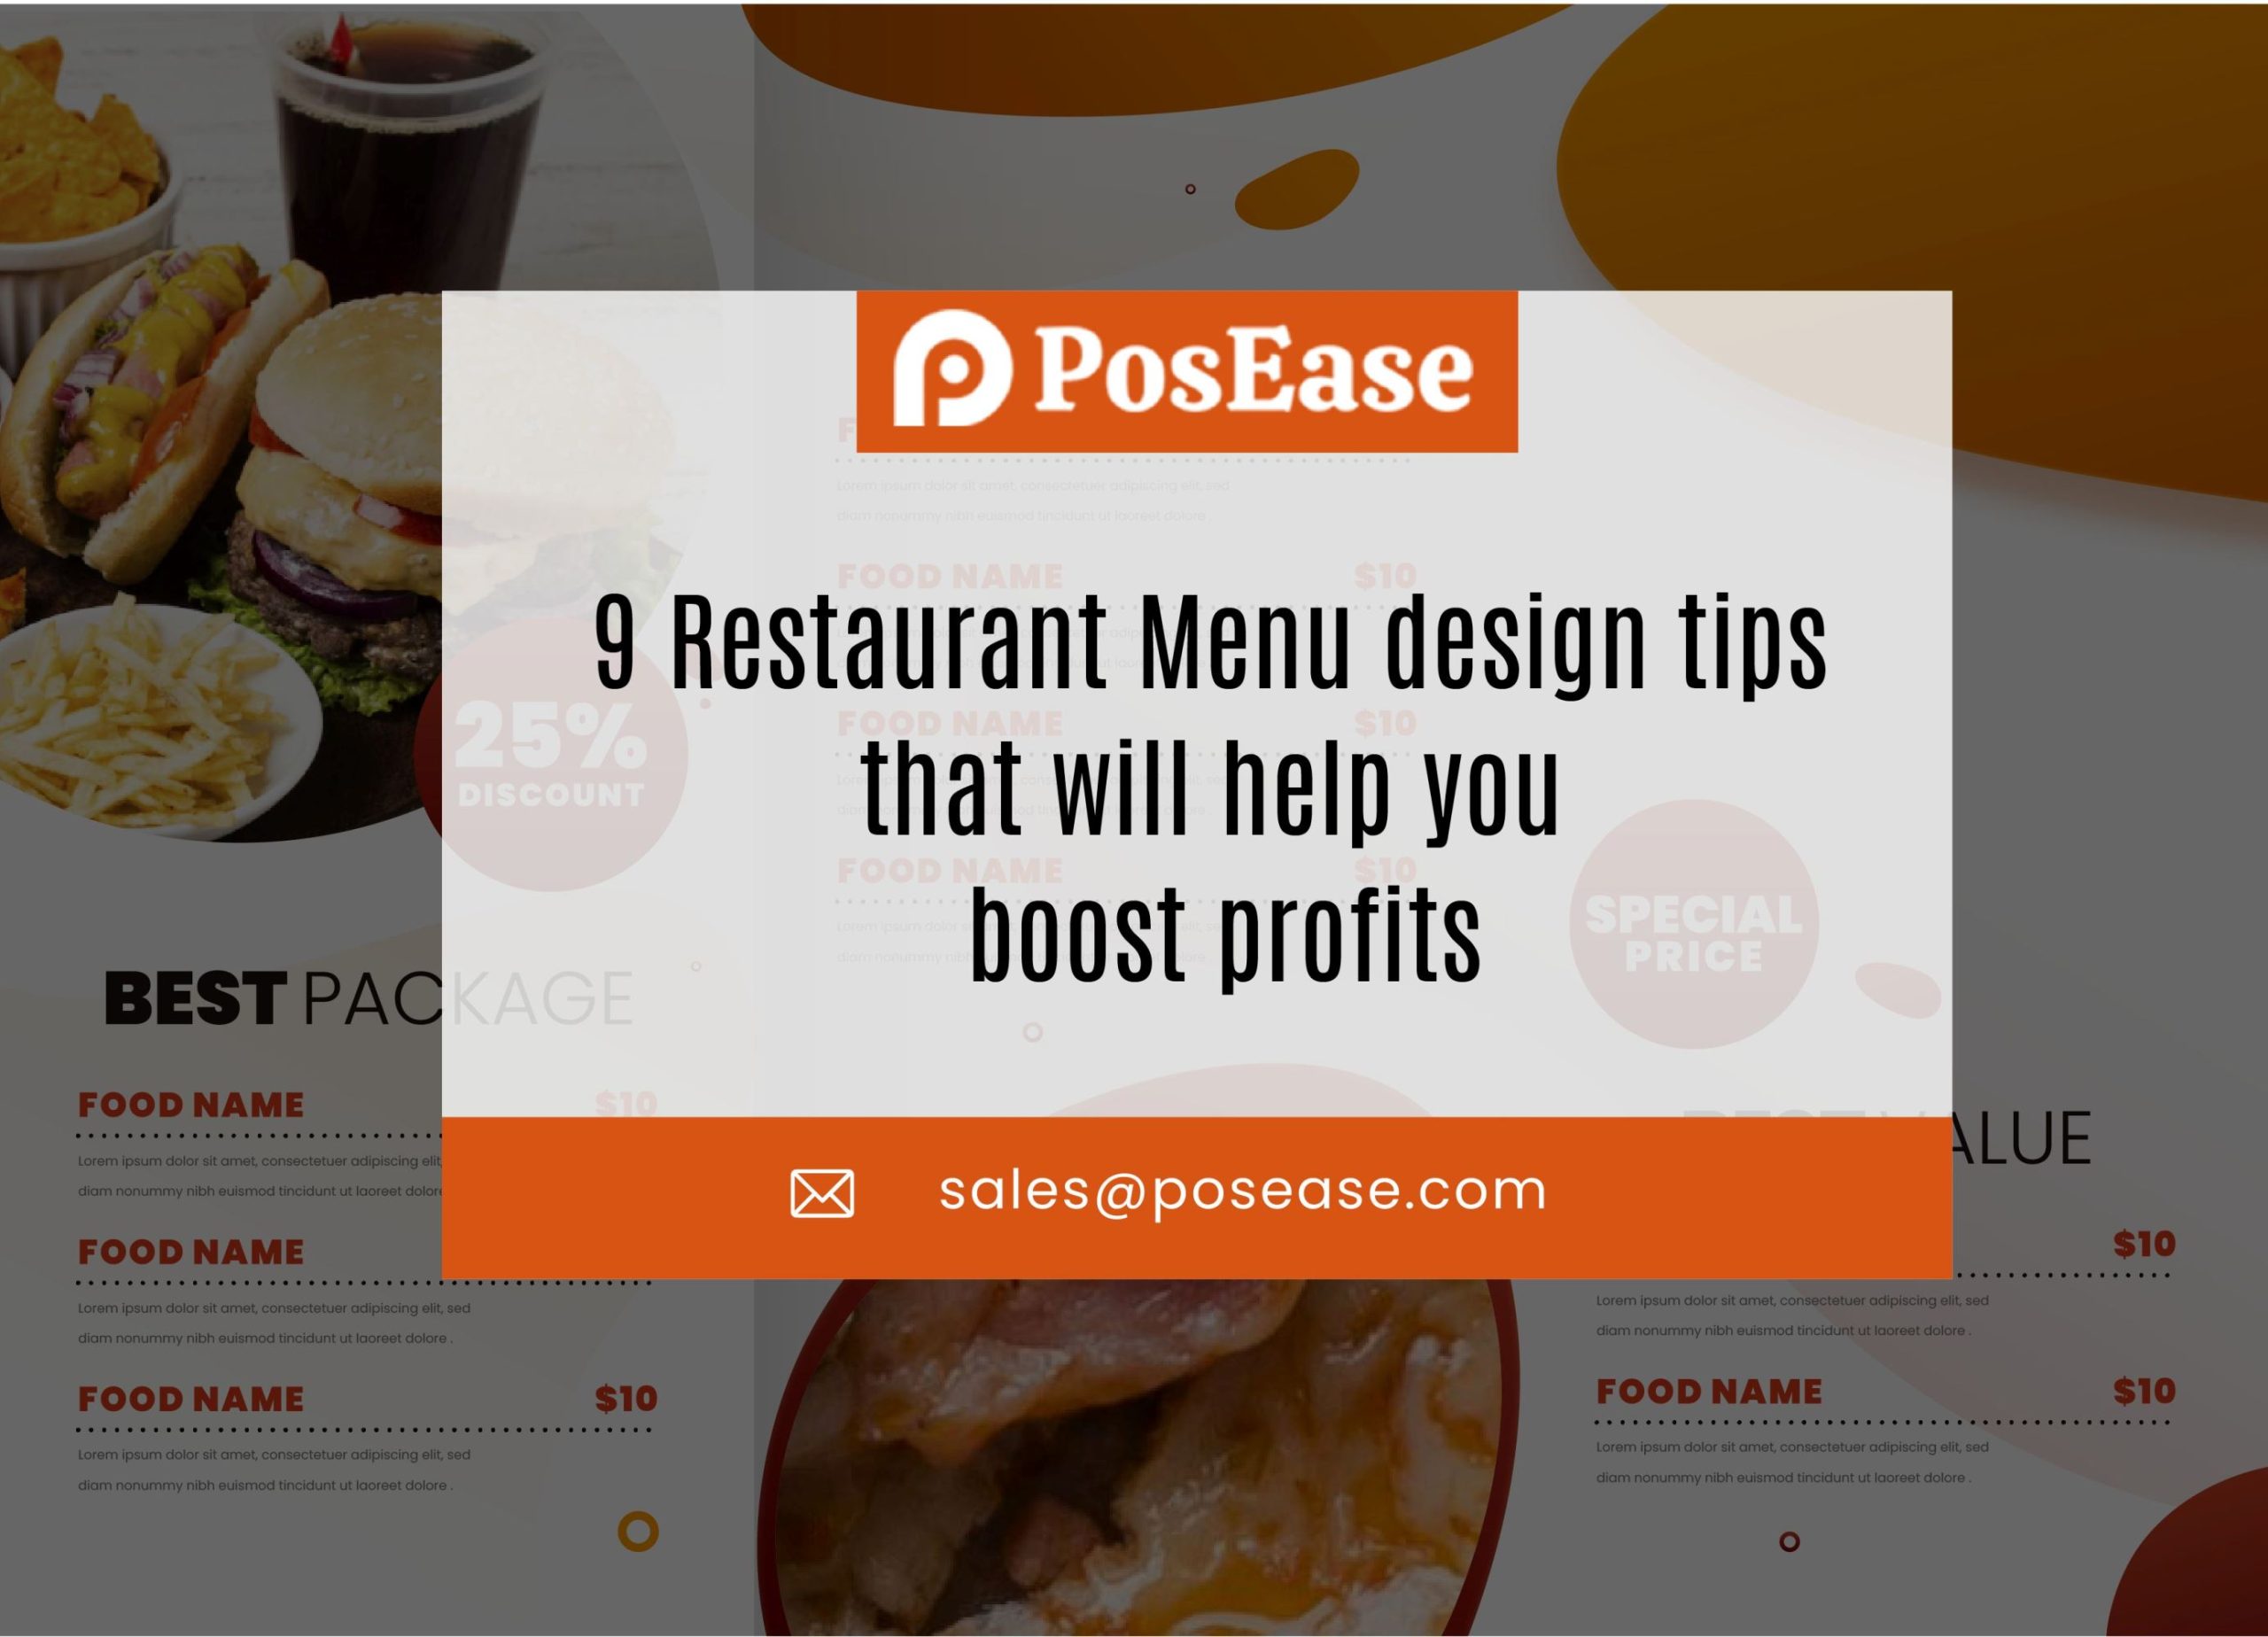 9 Restaurant Menu design tips that will help you boost profits